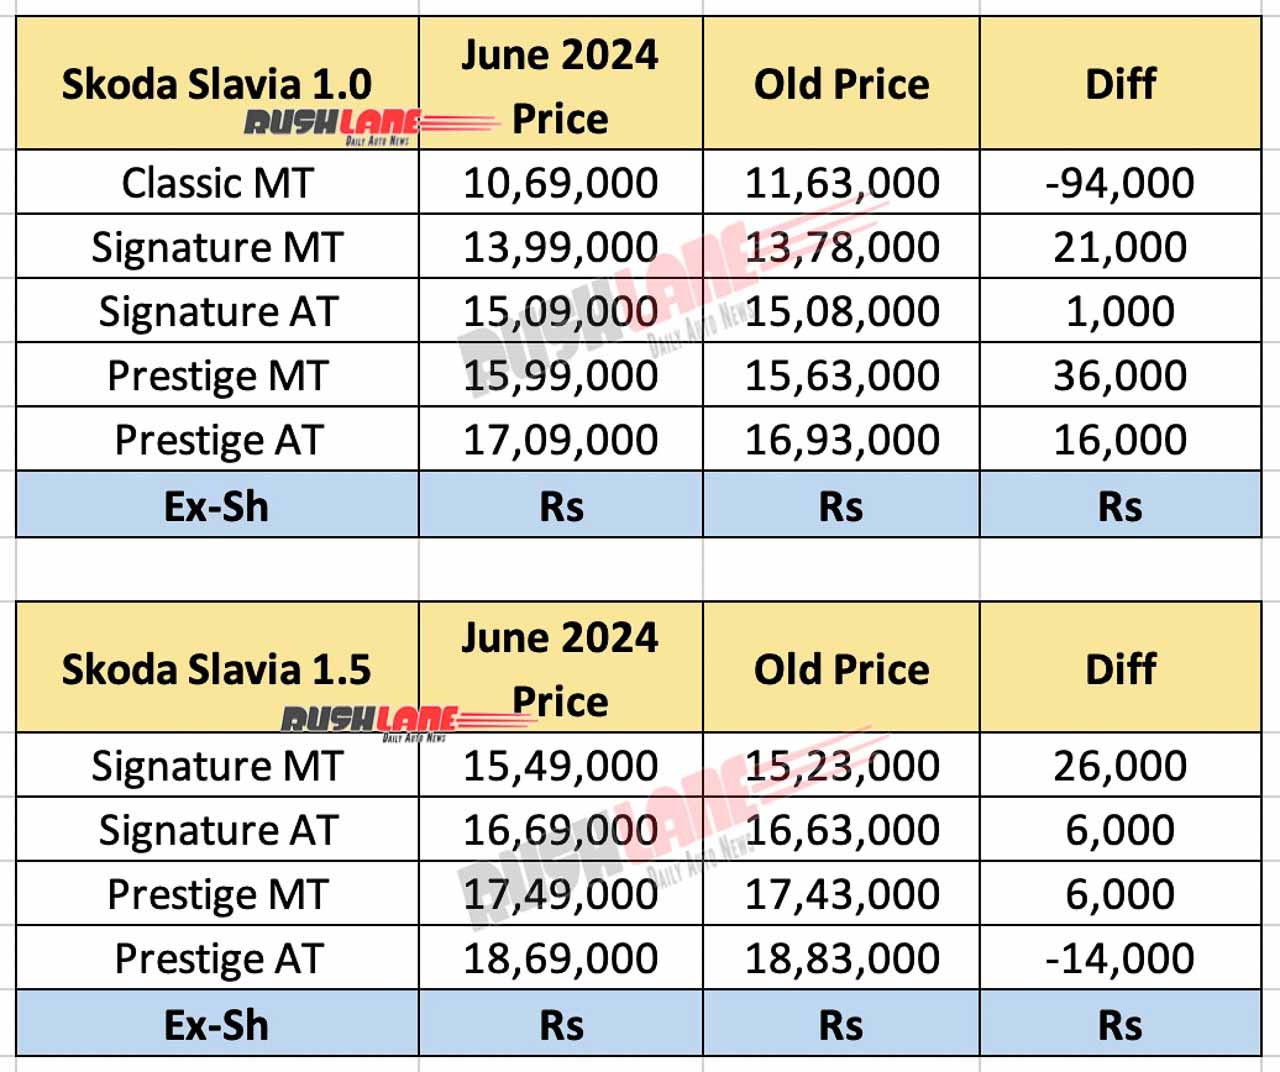 Skoda Slavia Price Update - June 2024